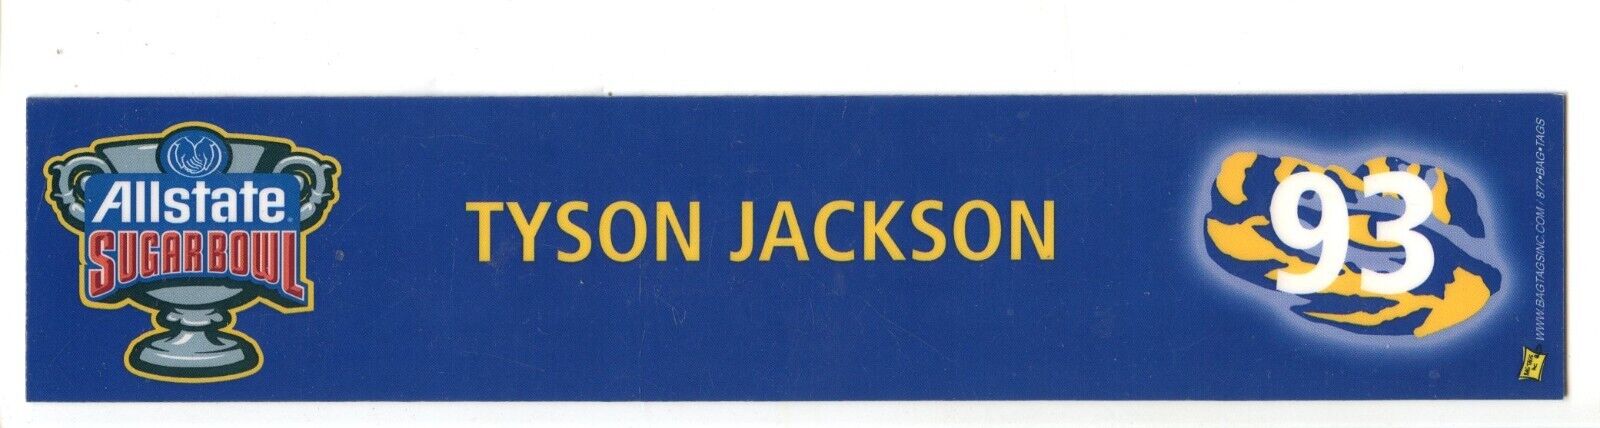 Tyson Jackson #93 LSU Locker Room Name Plate Autographed